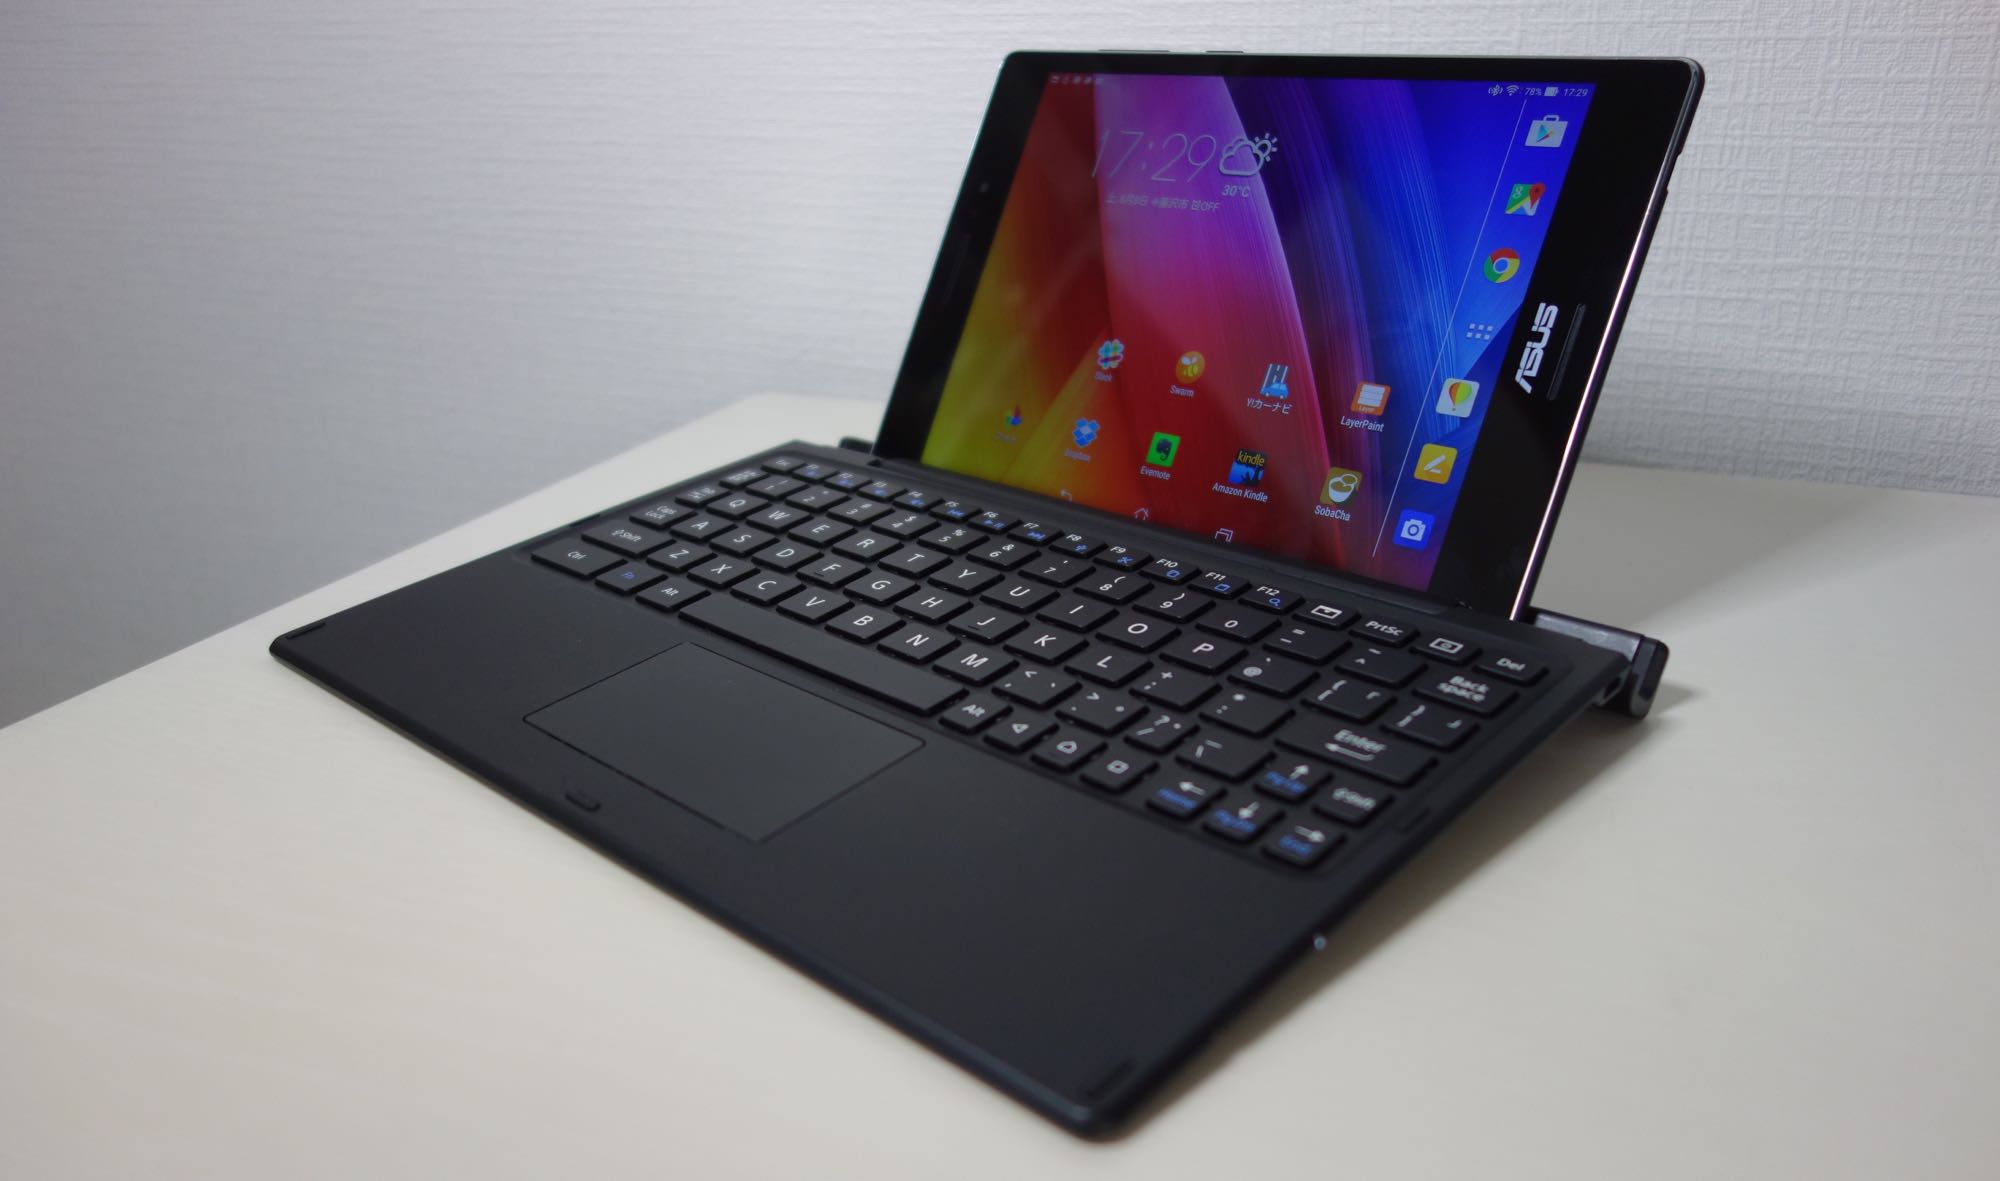 Xperia Z4 Tablet純正キーボードBKB50をZenPad S 8.0やiPad Air 2で使ってみた #Xperiaアンバサダー  ガジェットショット